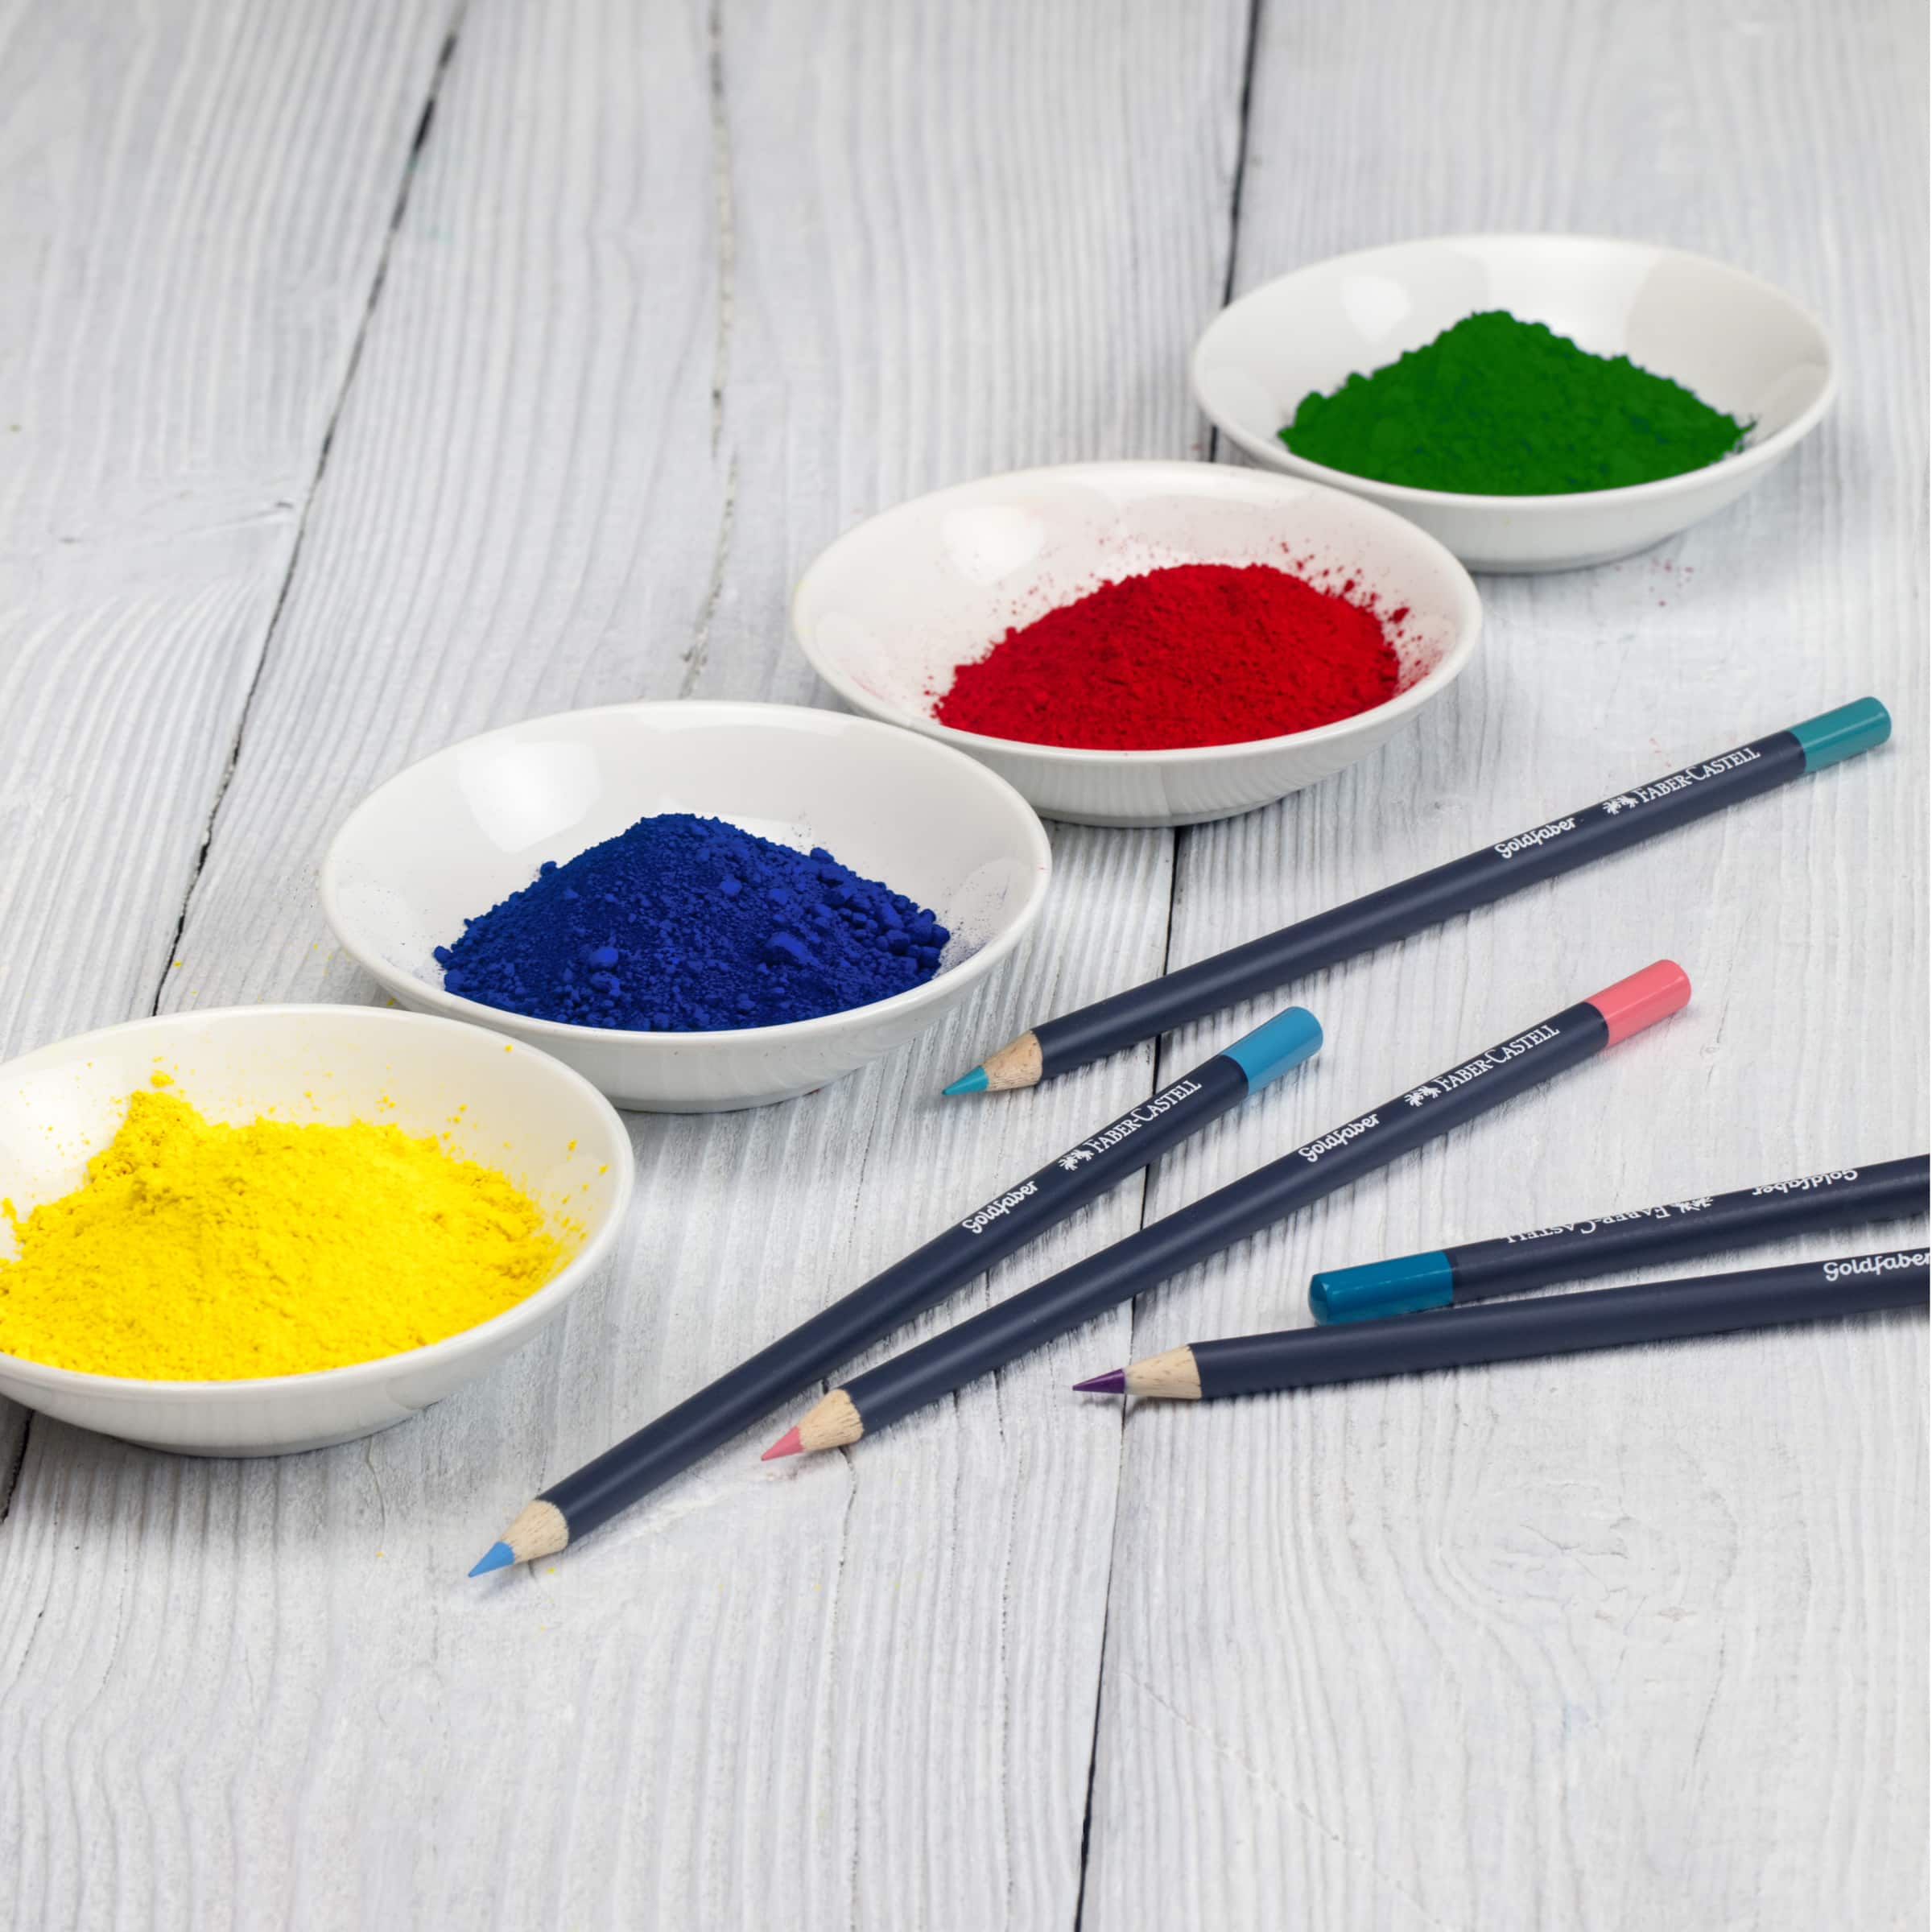 Faber-Castell&#xAE; Goldfaber&#x2122; 24 Color Pencil Tin Set 